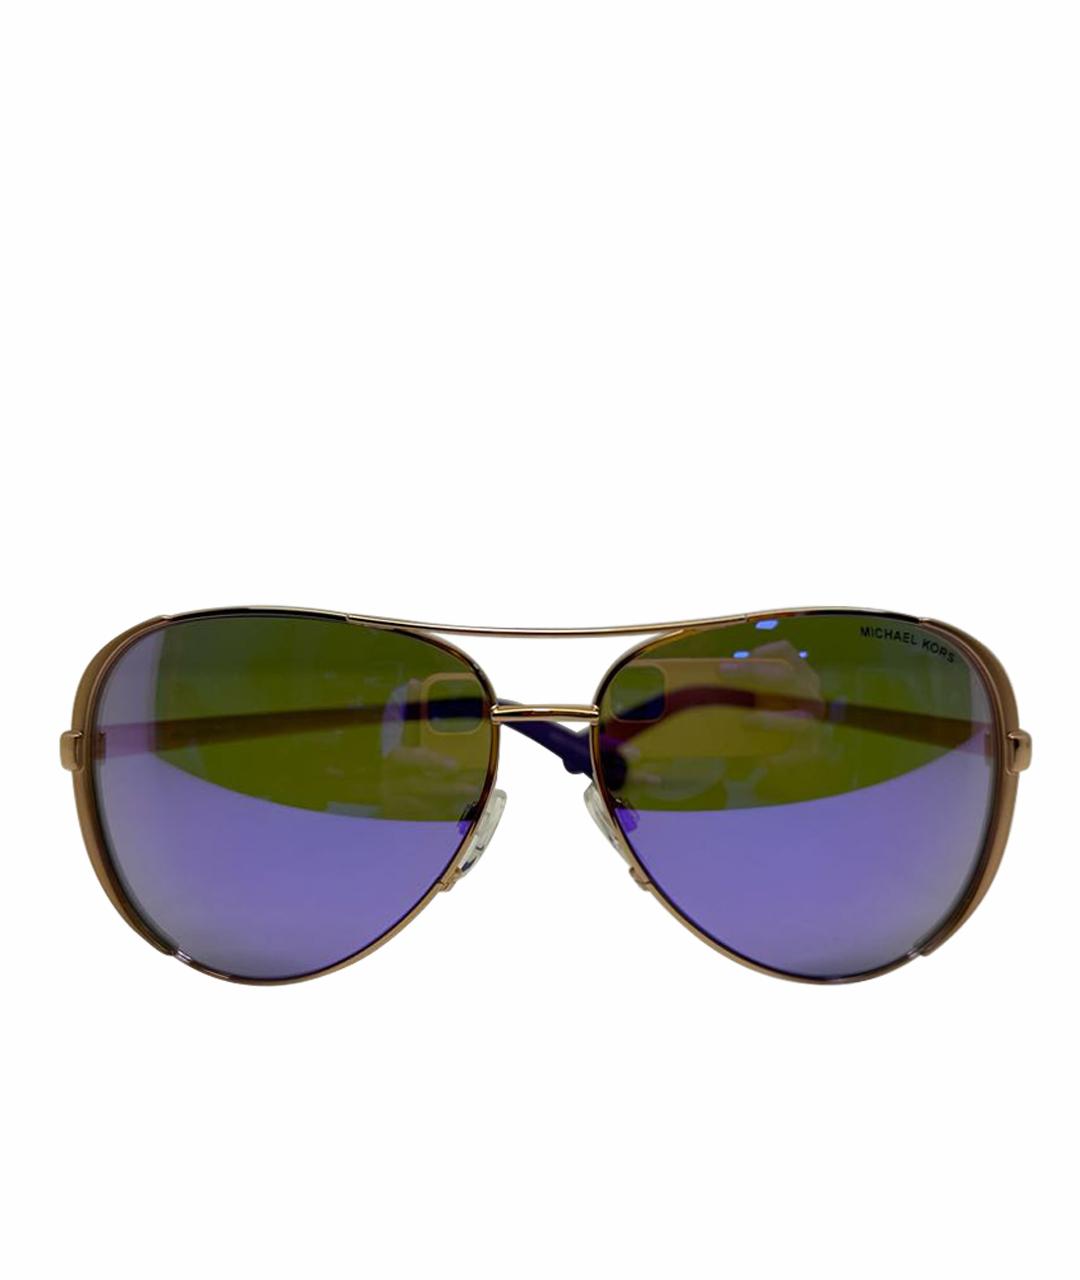 MICHAEL KORS Металлические солнцезащитные очки, фото 1